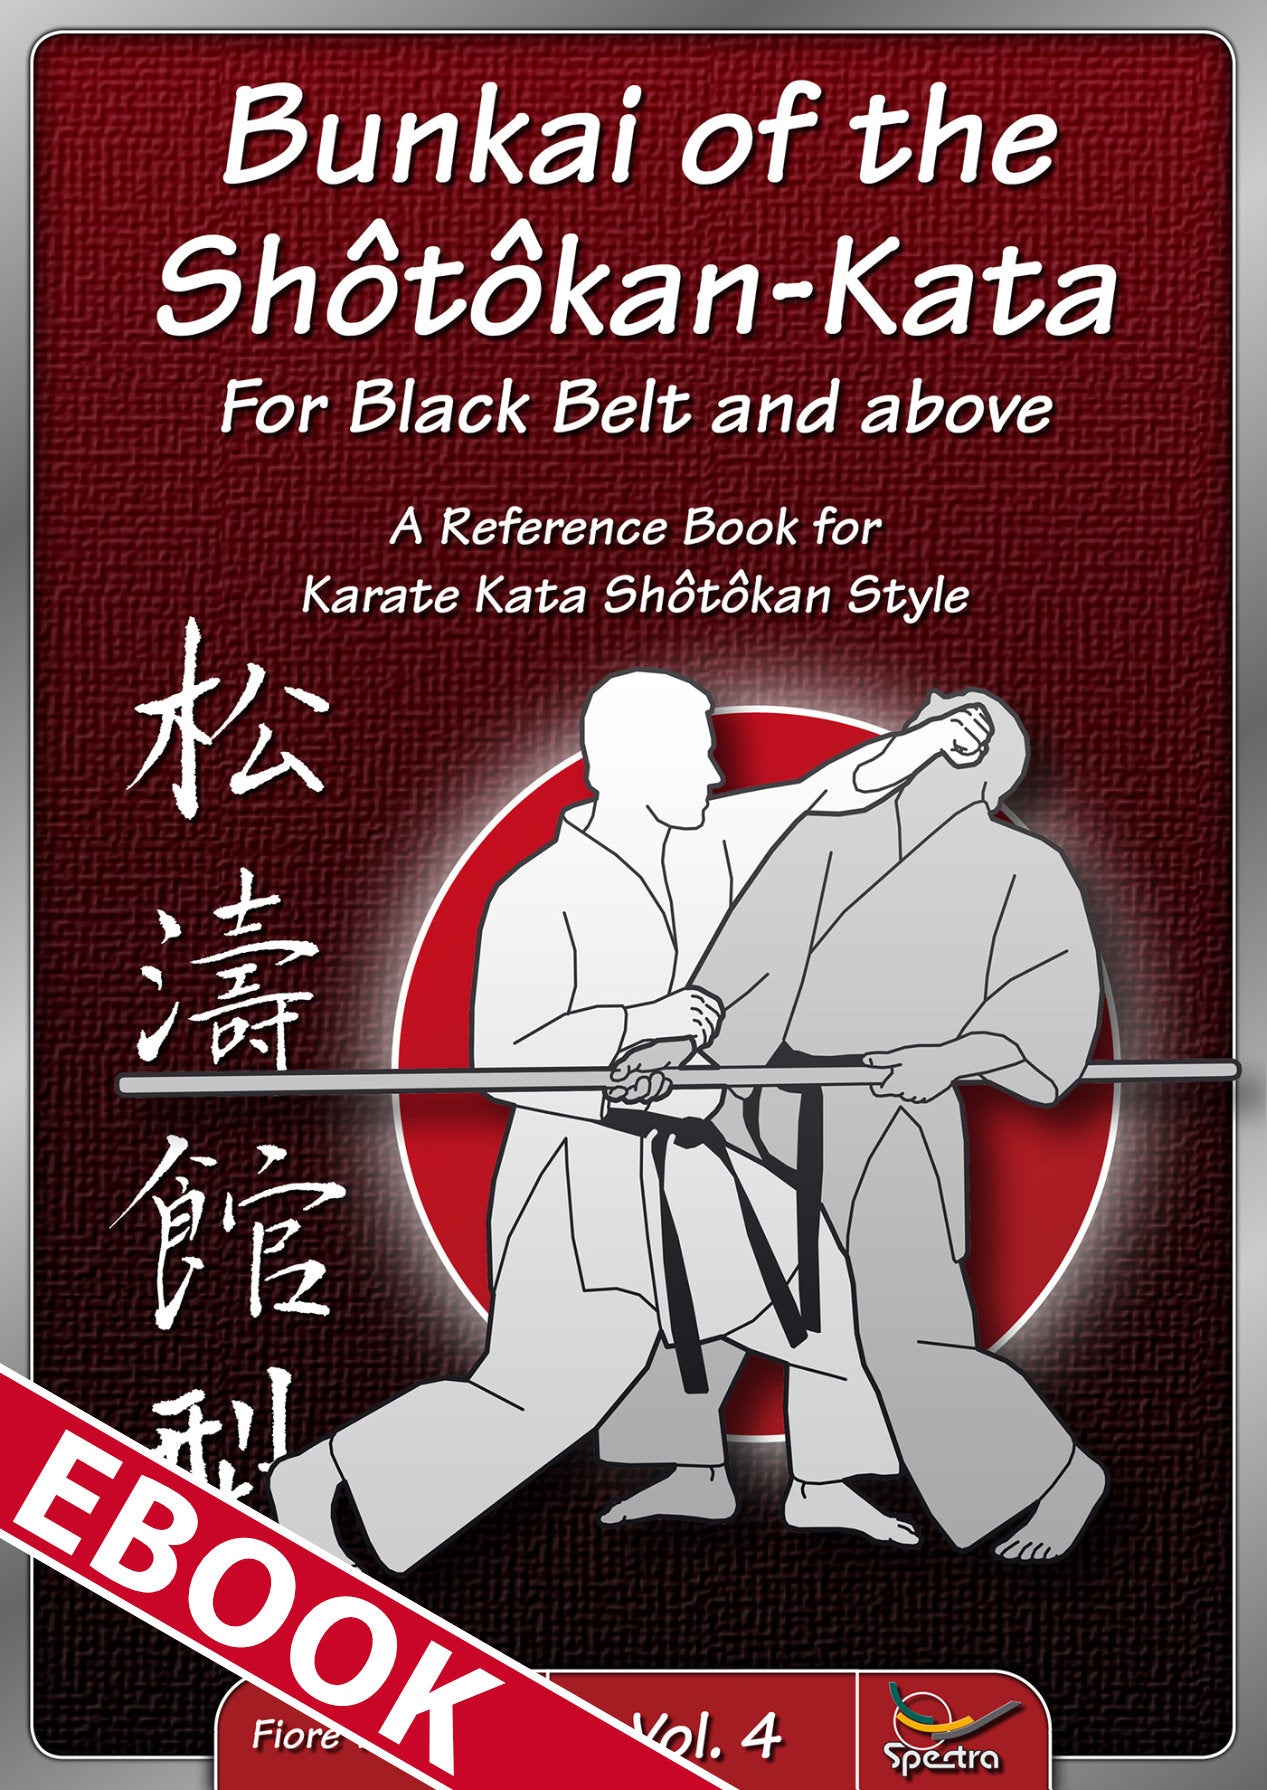 🇬🇧 eBook | Bunkai of the Shōtōkan-Kata from black belt | Volume 4